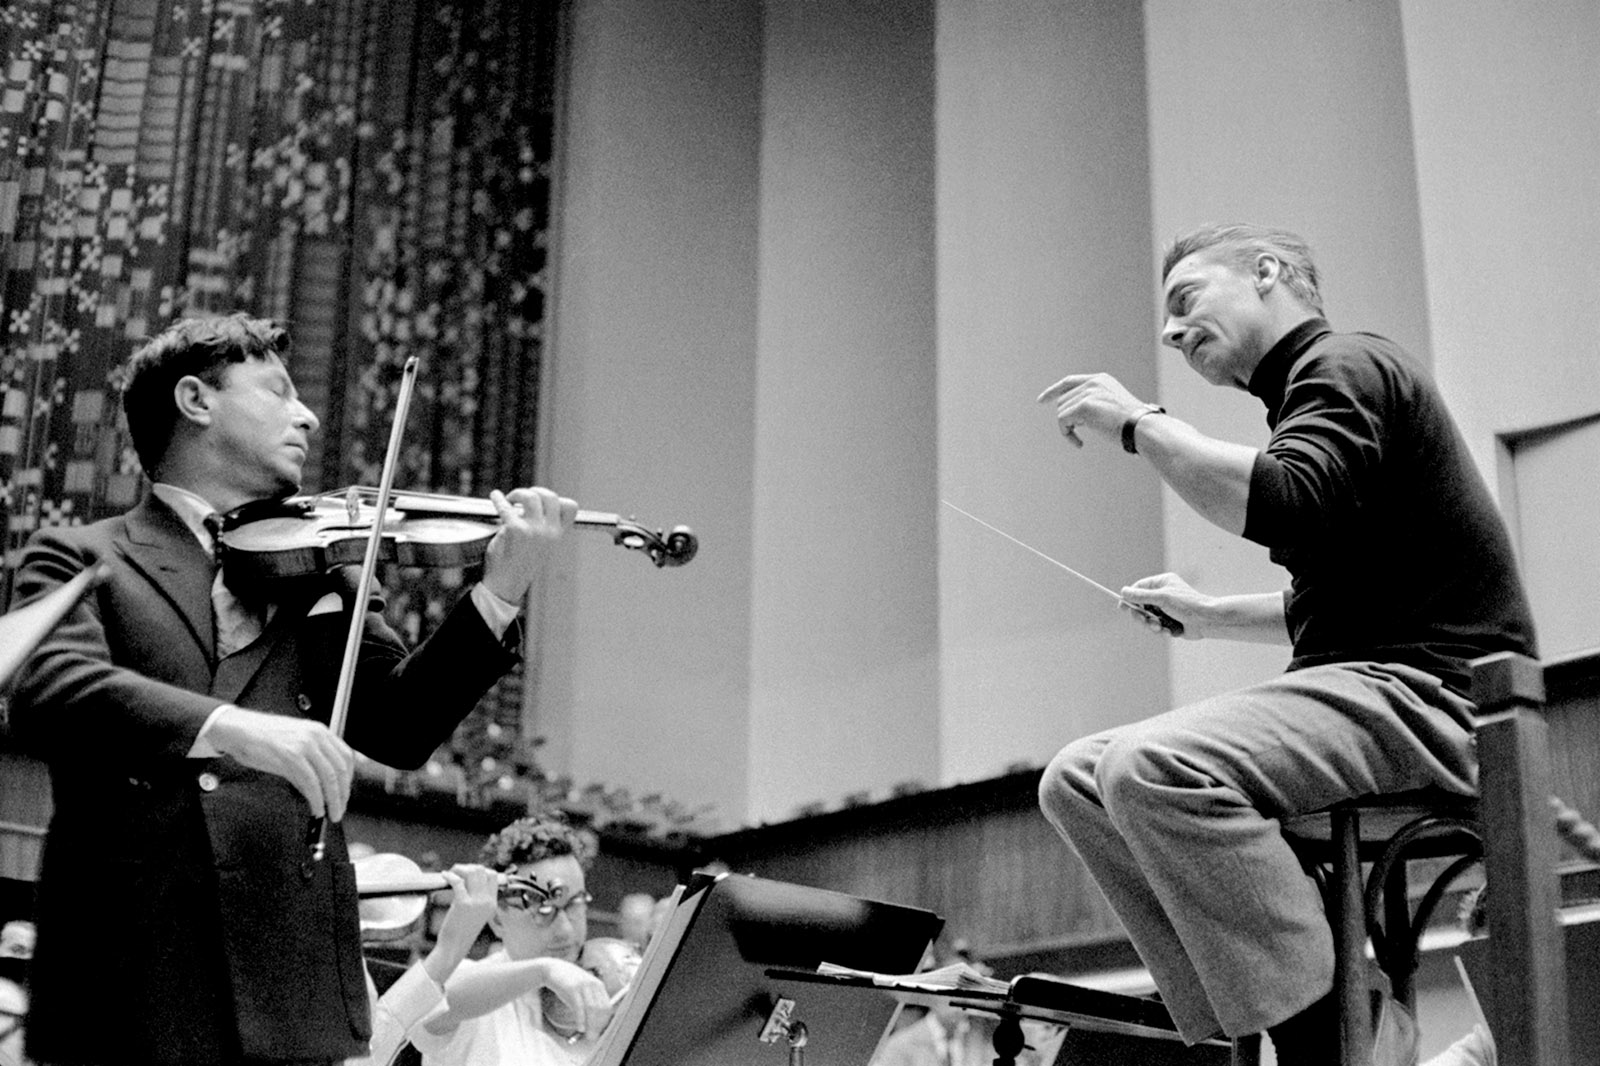 Herbert von Karajan (right) with the violinist Nathan Milstein during a rehearsal, Lucerne, 1957